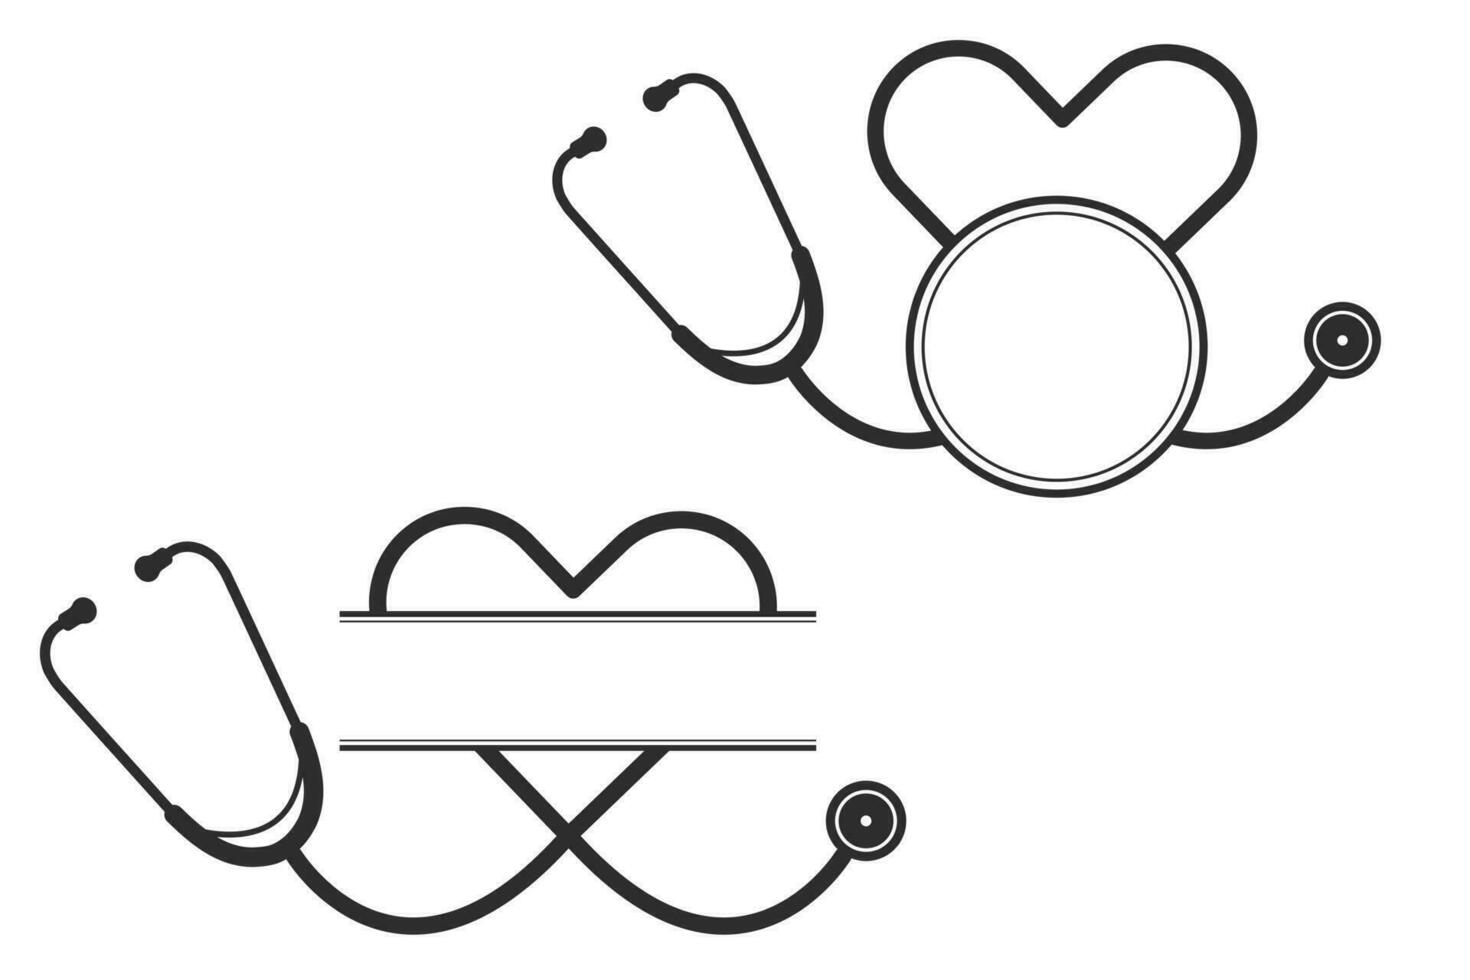 Stethoscope Monogram Vector, Medical tools Monogram Vector, Stethoscope illustration, Doctor, Nurse, Health, illustration, Clip Art, medical illustration, vector